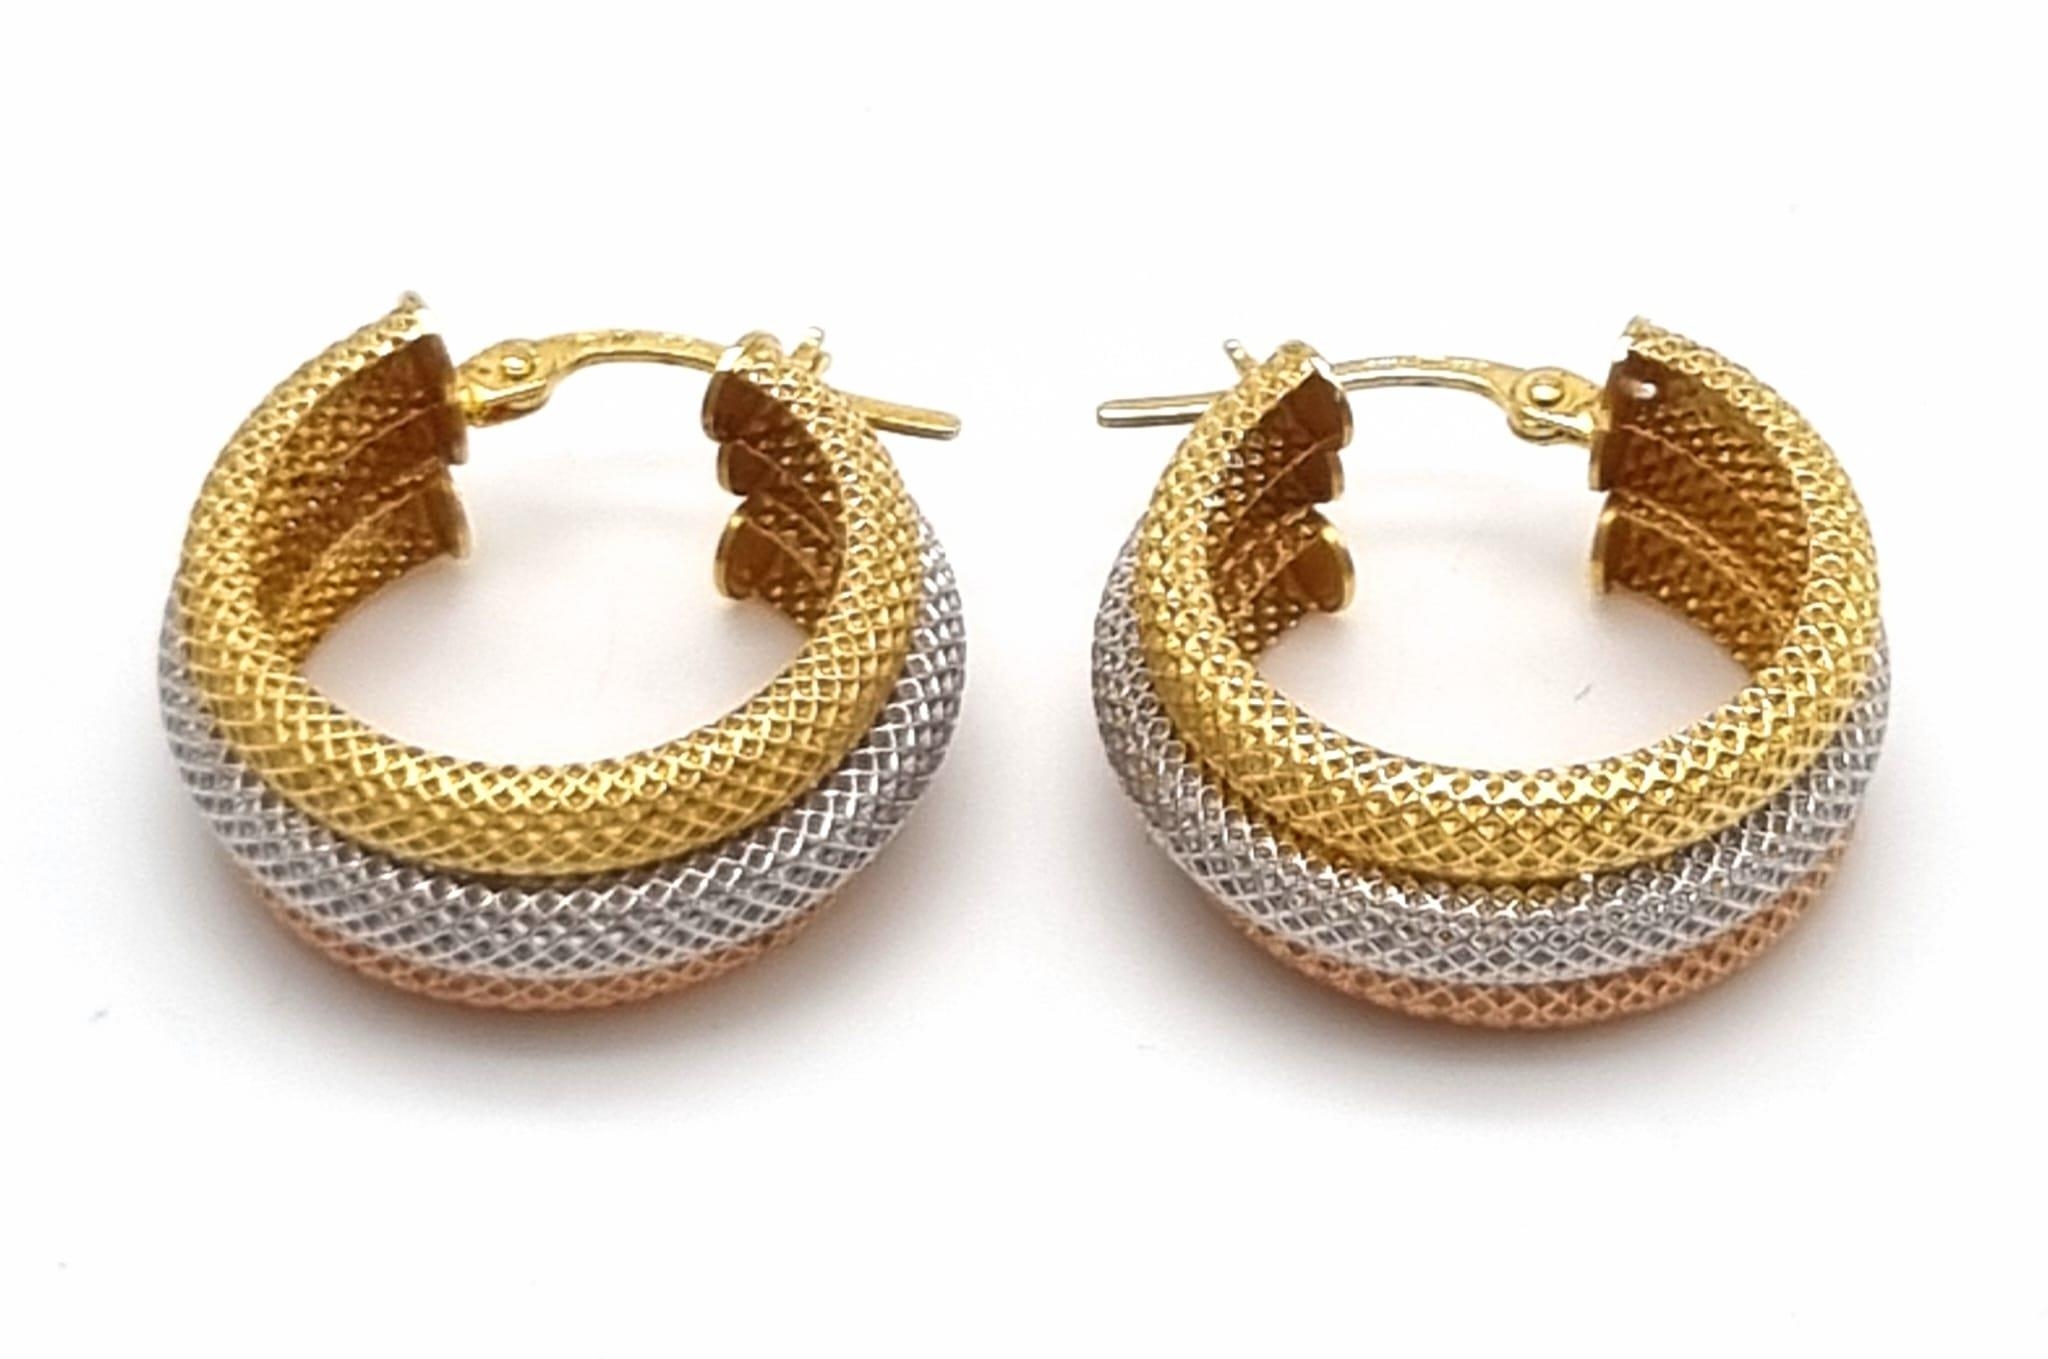 9k 3 colour gold triple row mesh detail hoop earrings 2.3g - Image 3 of 4